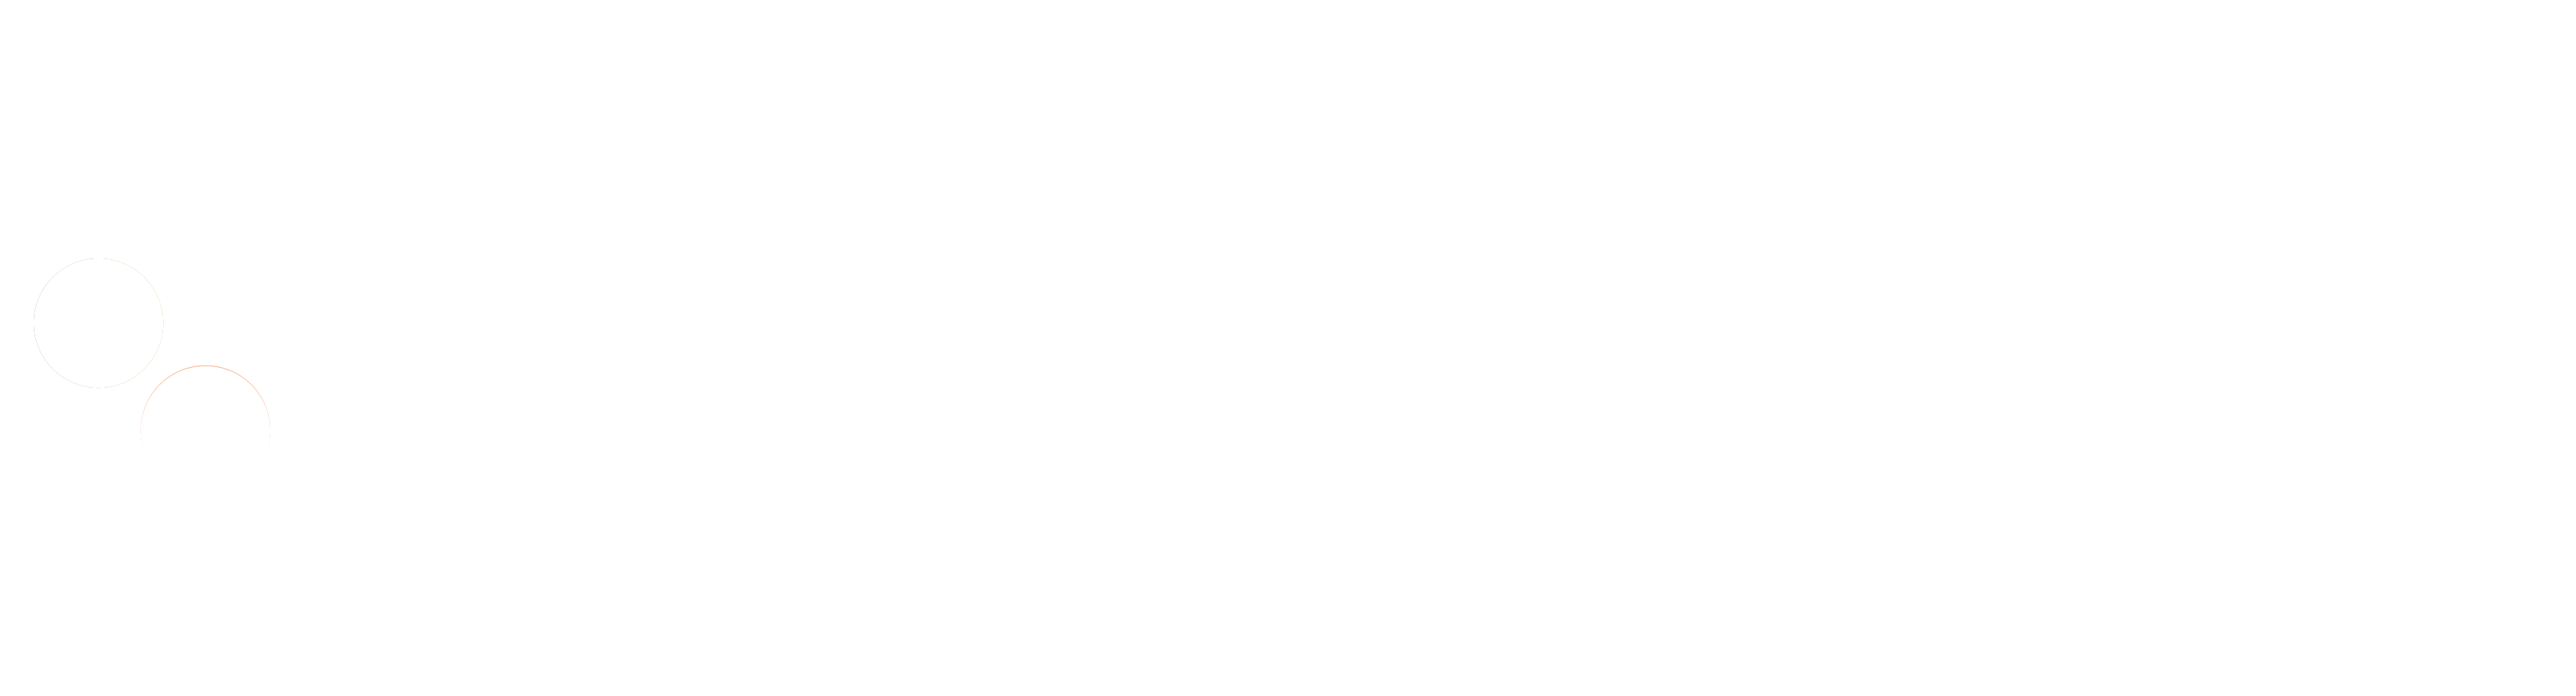 Logo Herkula light